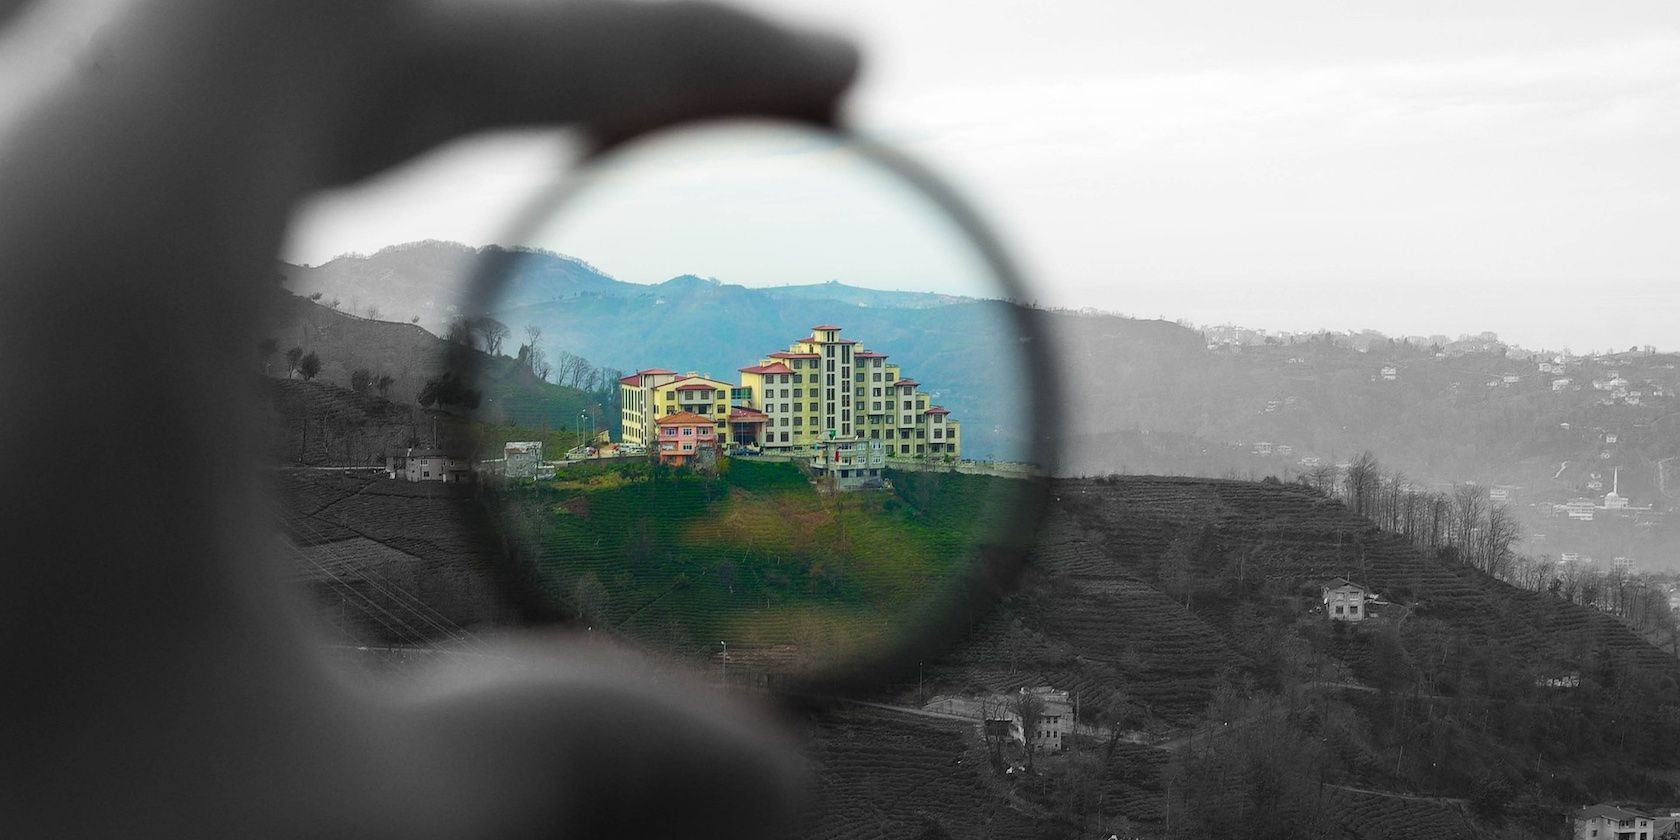 Mountain Resort through a filter